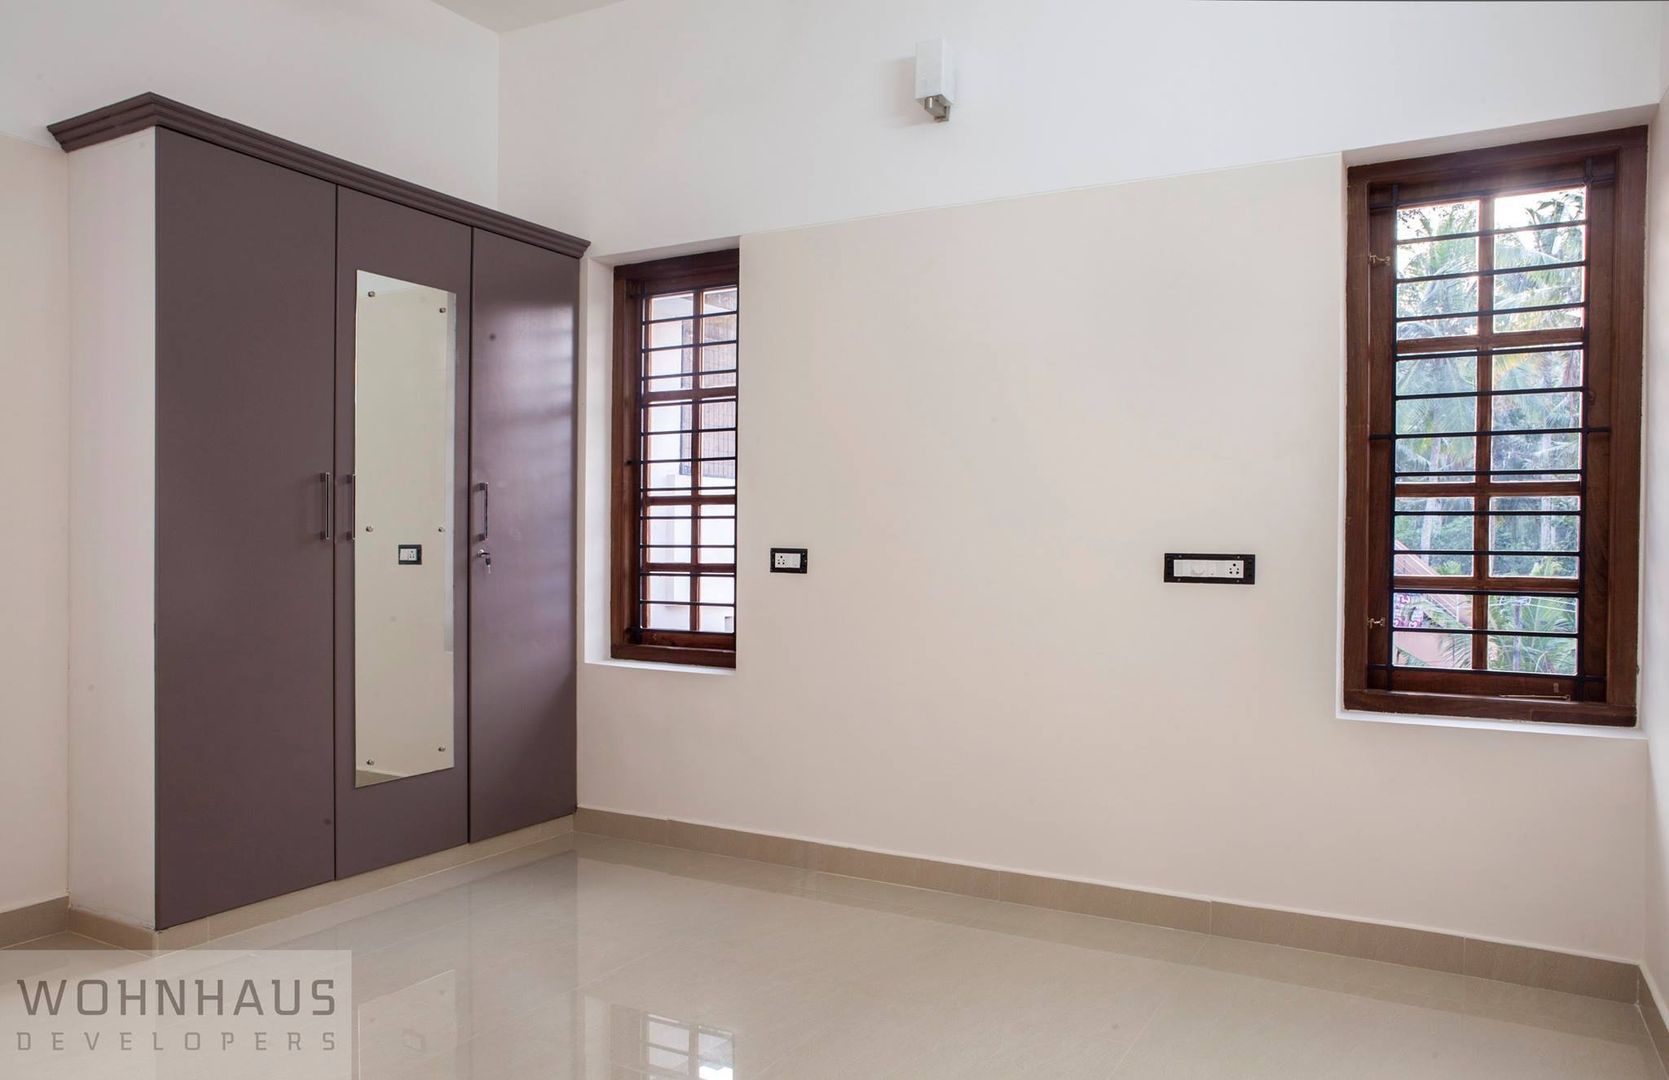 1400sqft House in Trivandrum, Wohnhaus Developers Wohnhaus Developers Modern Bedroom Ceramic